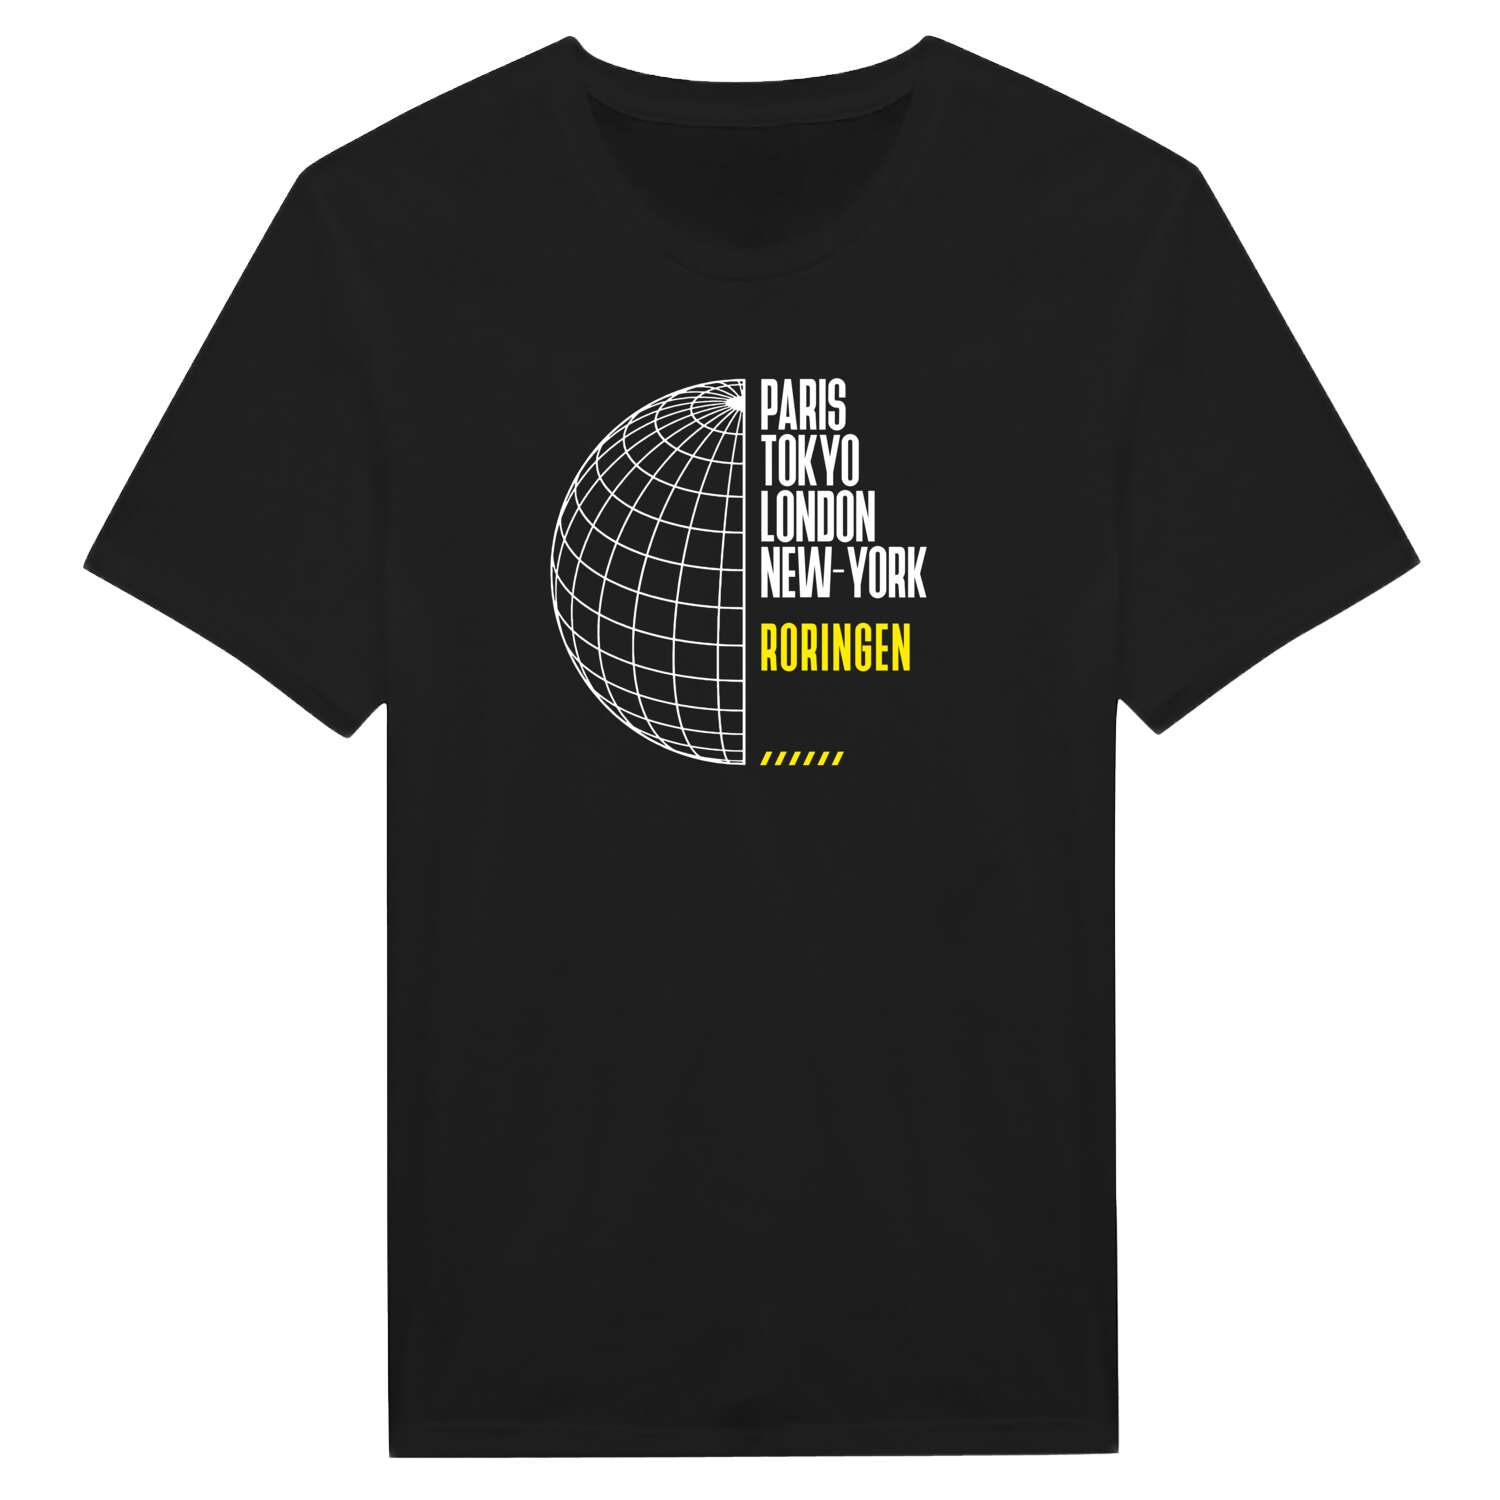 Roringen T-Shirt »Paris Tokyo London«